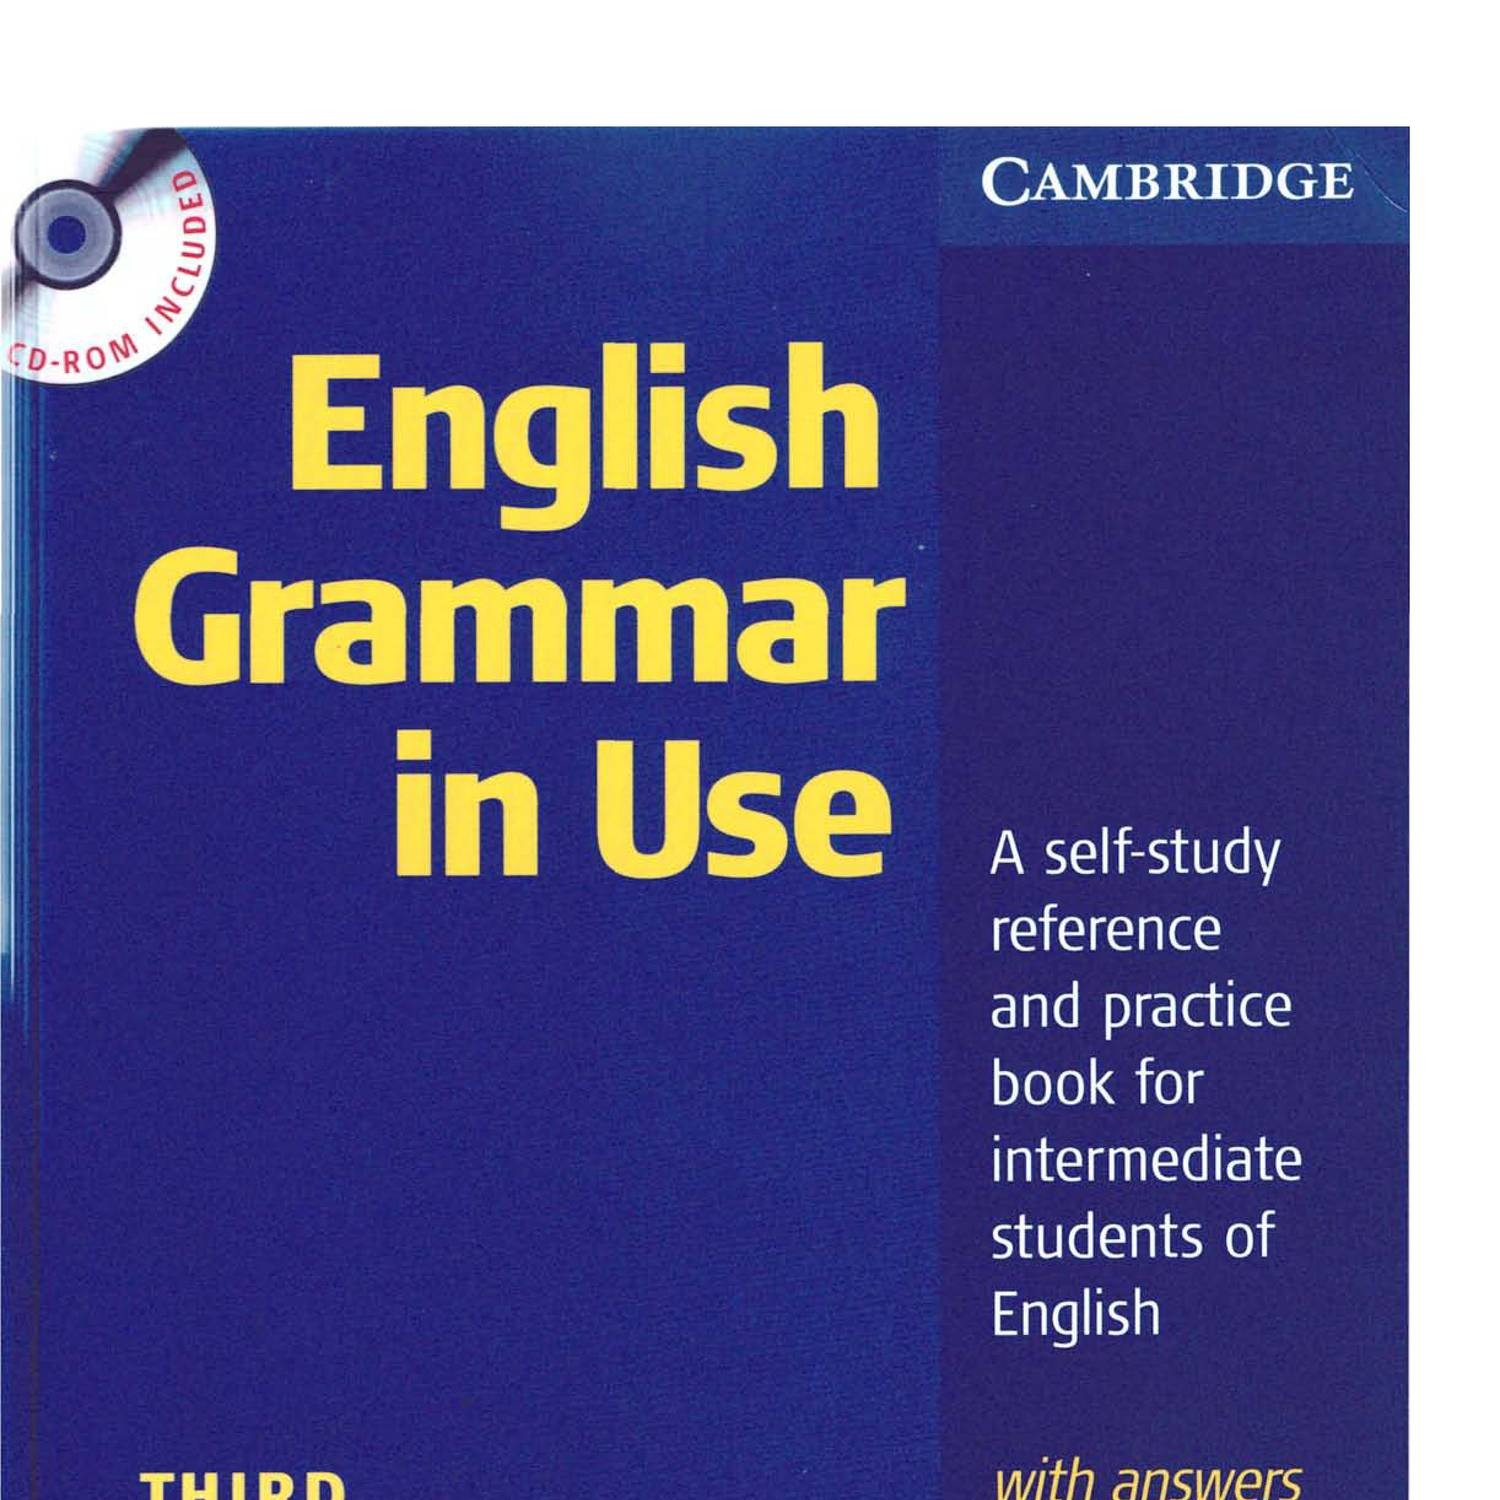 Cambridge - English Grammar in Use (Intermediate) (2005).pdf | DocDroid